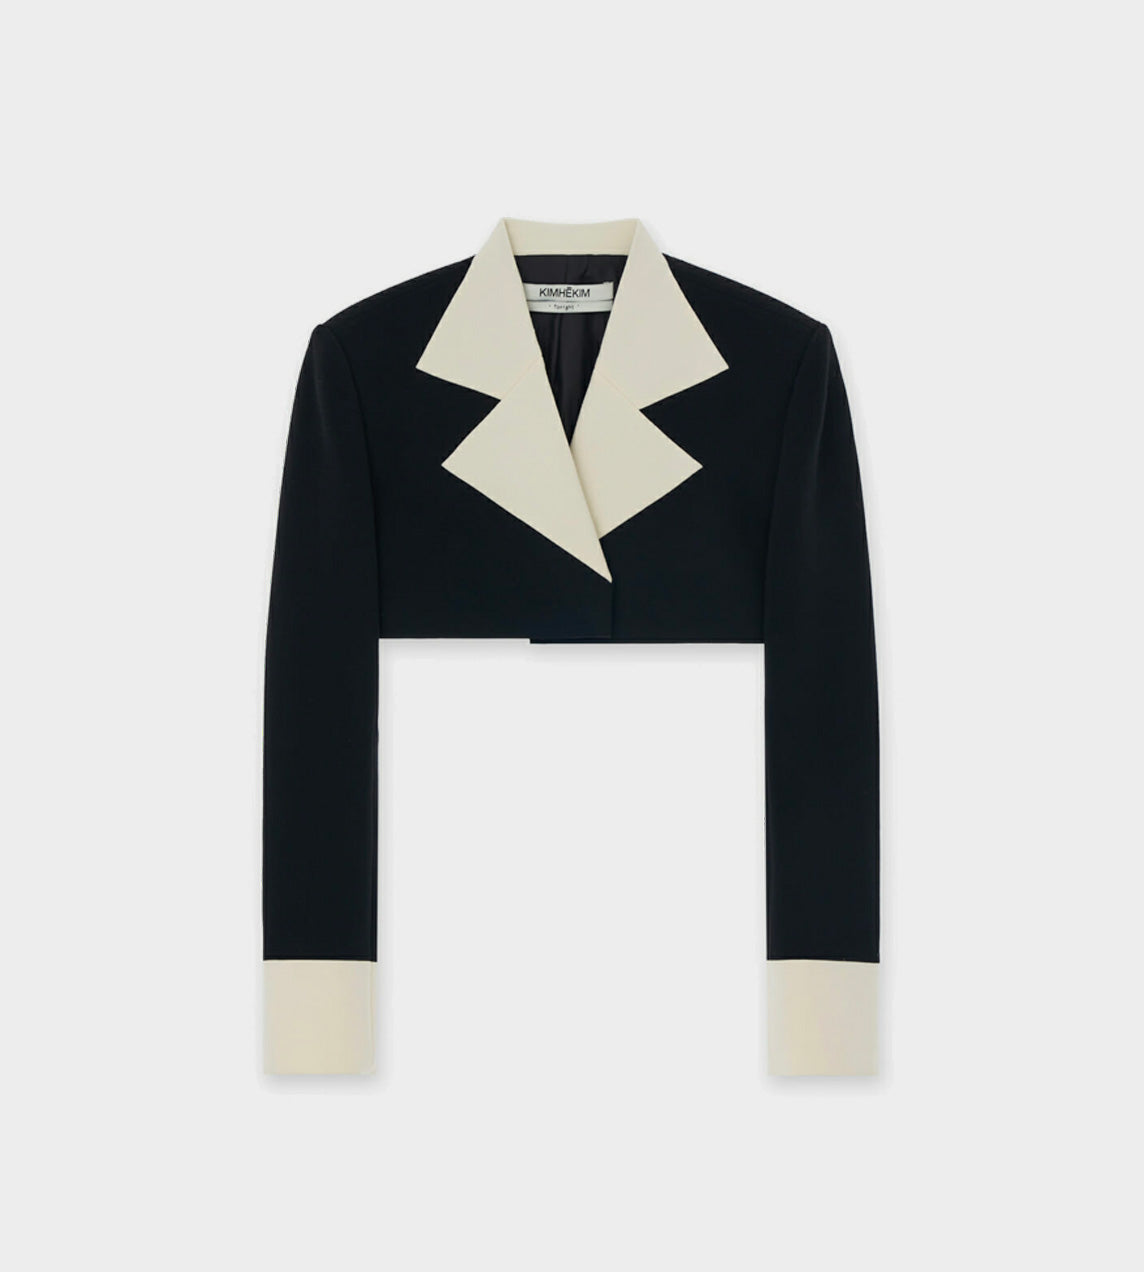 KIMHEKIM - Bicolor Cropped Jacket Black/White